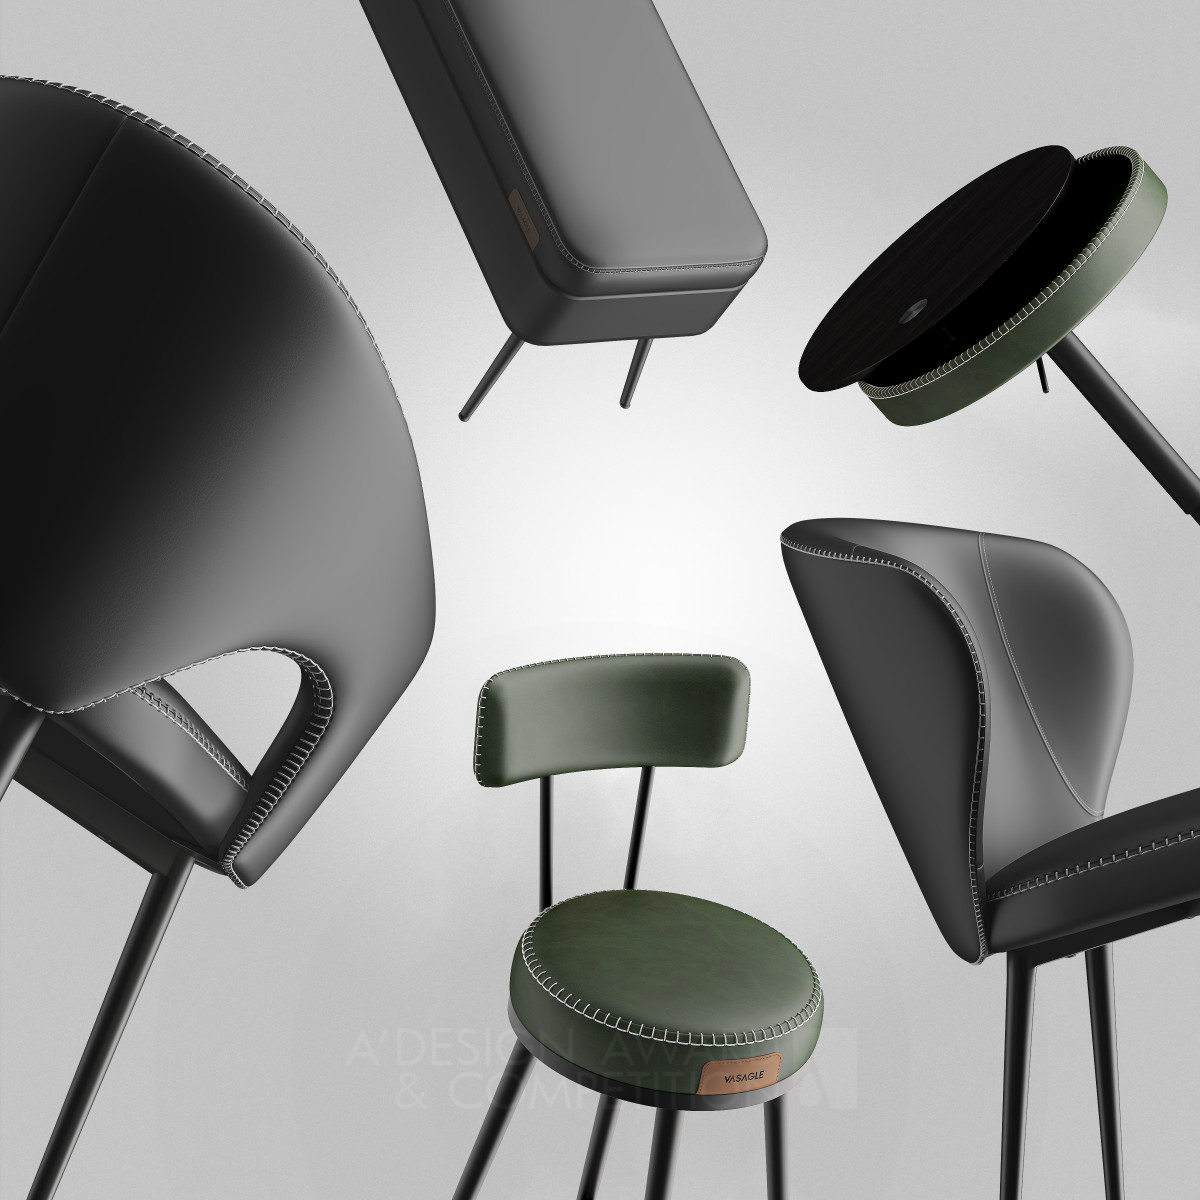 Ziel Home Furnishing Technology Co., Ltd wins Bronze at the prestigious A' Furniture Design Award with Ekho Chair.